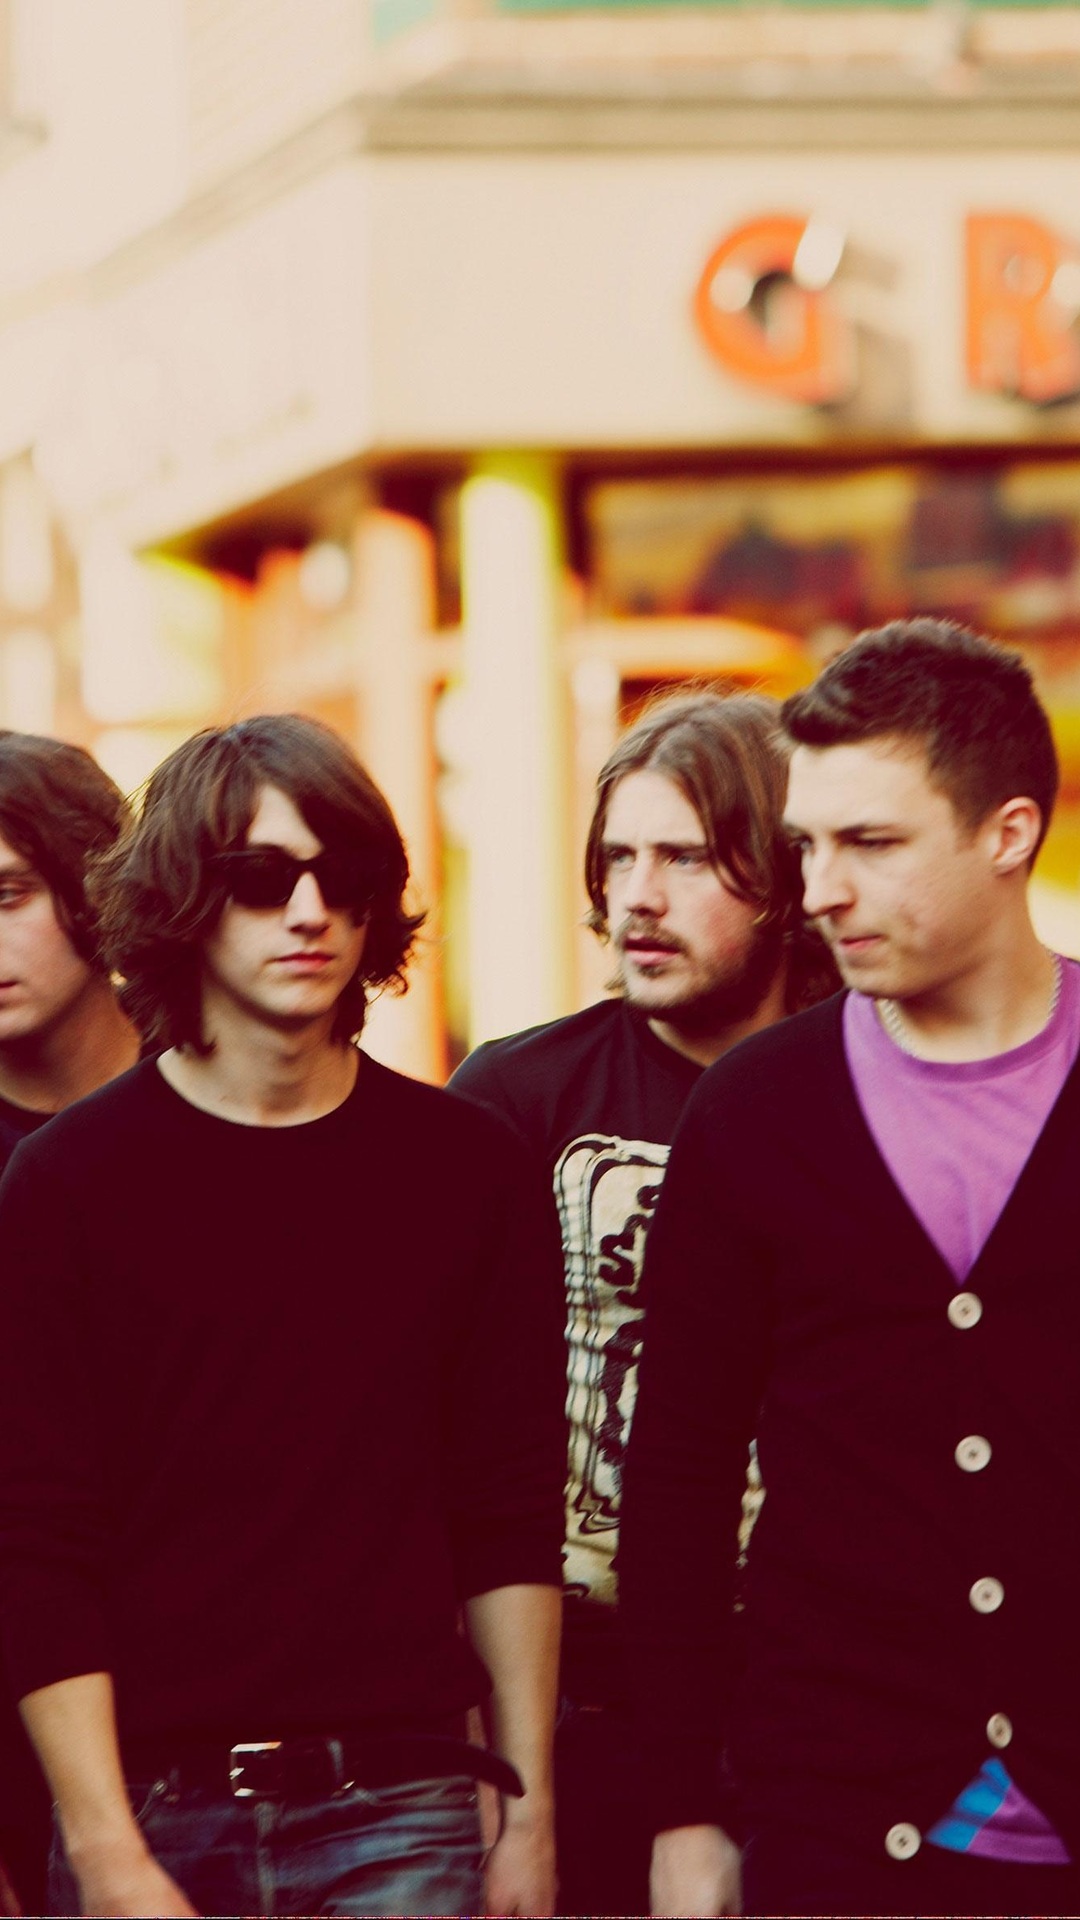 Arctic Monkeys Wallpaper Android क लए APK डउनलड कर